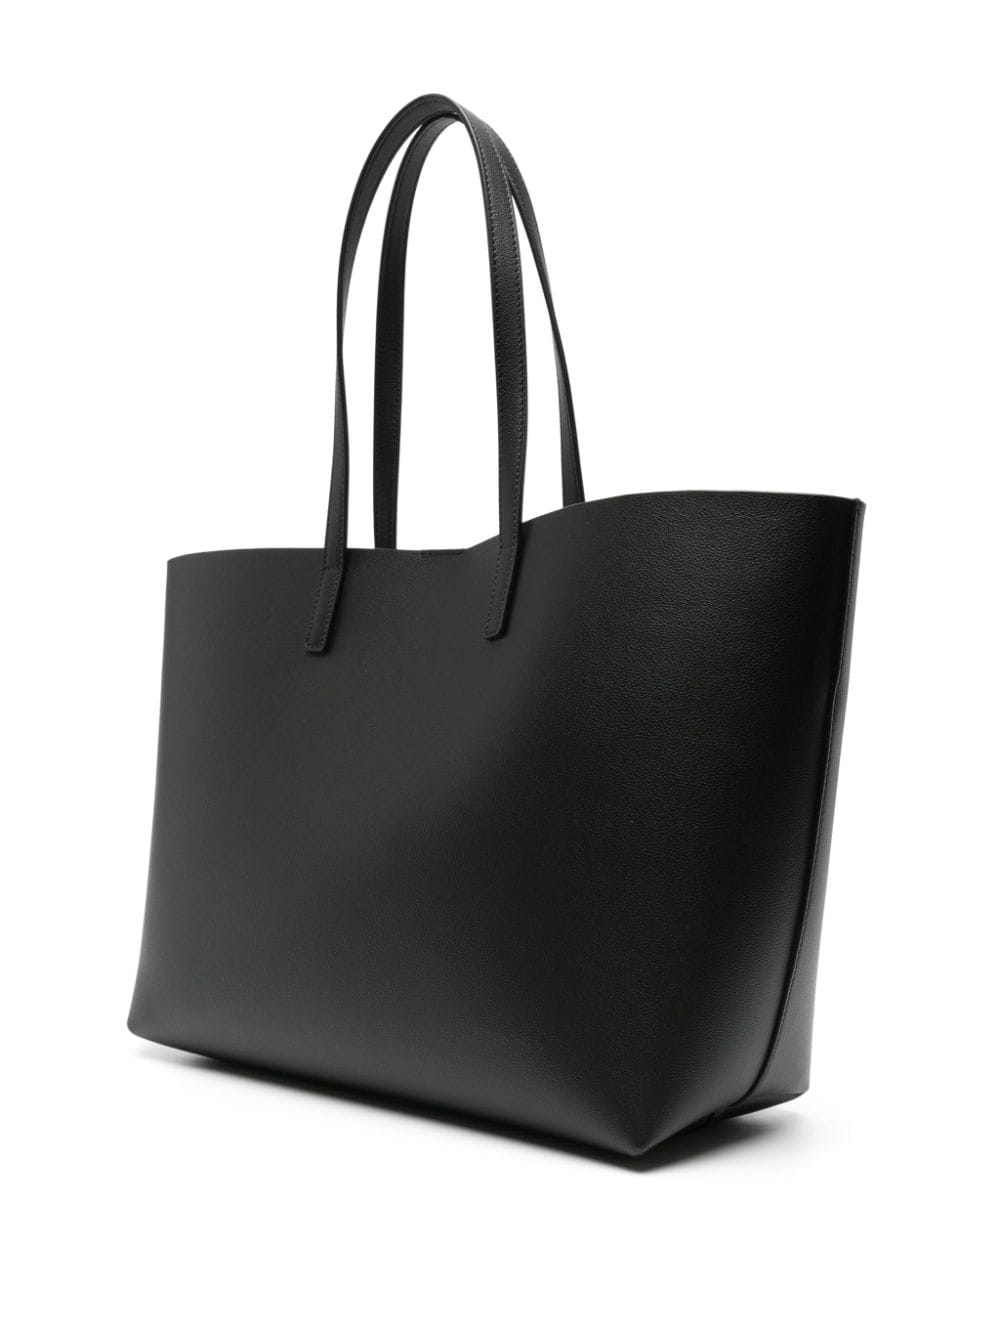 VERSACE Black Leather Tote Handbag with Iconic Acanthus Leaf Emblem